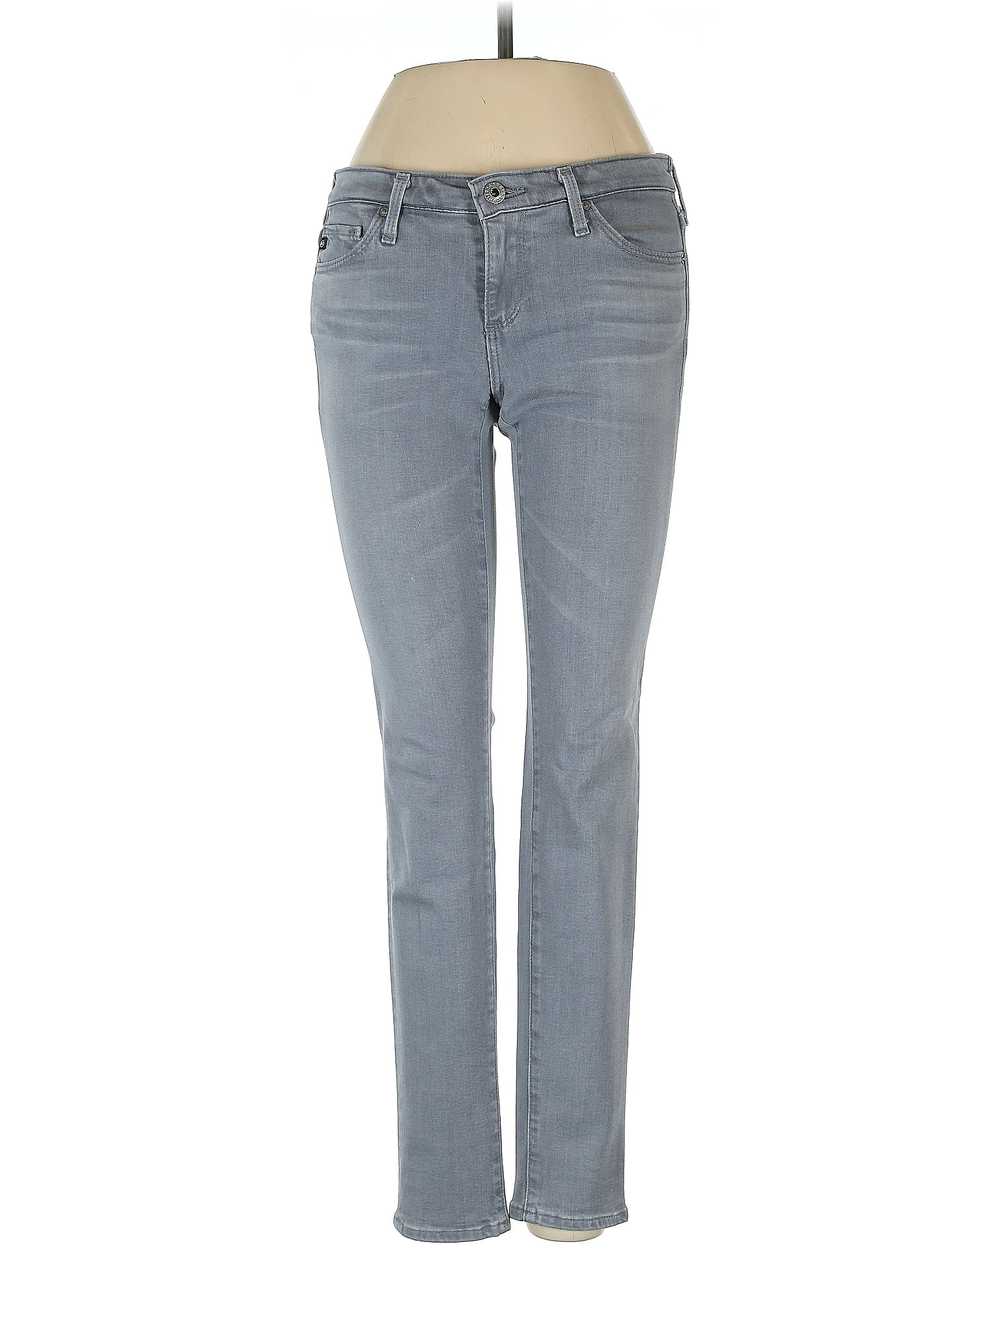 Adriano Goldschmied Women Gray Jeans 25W - image 1